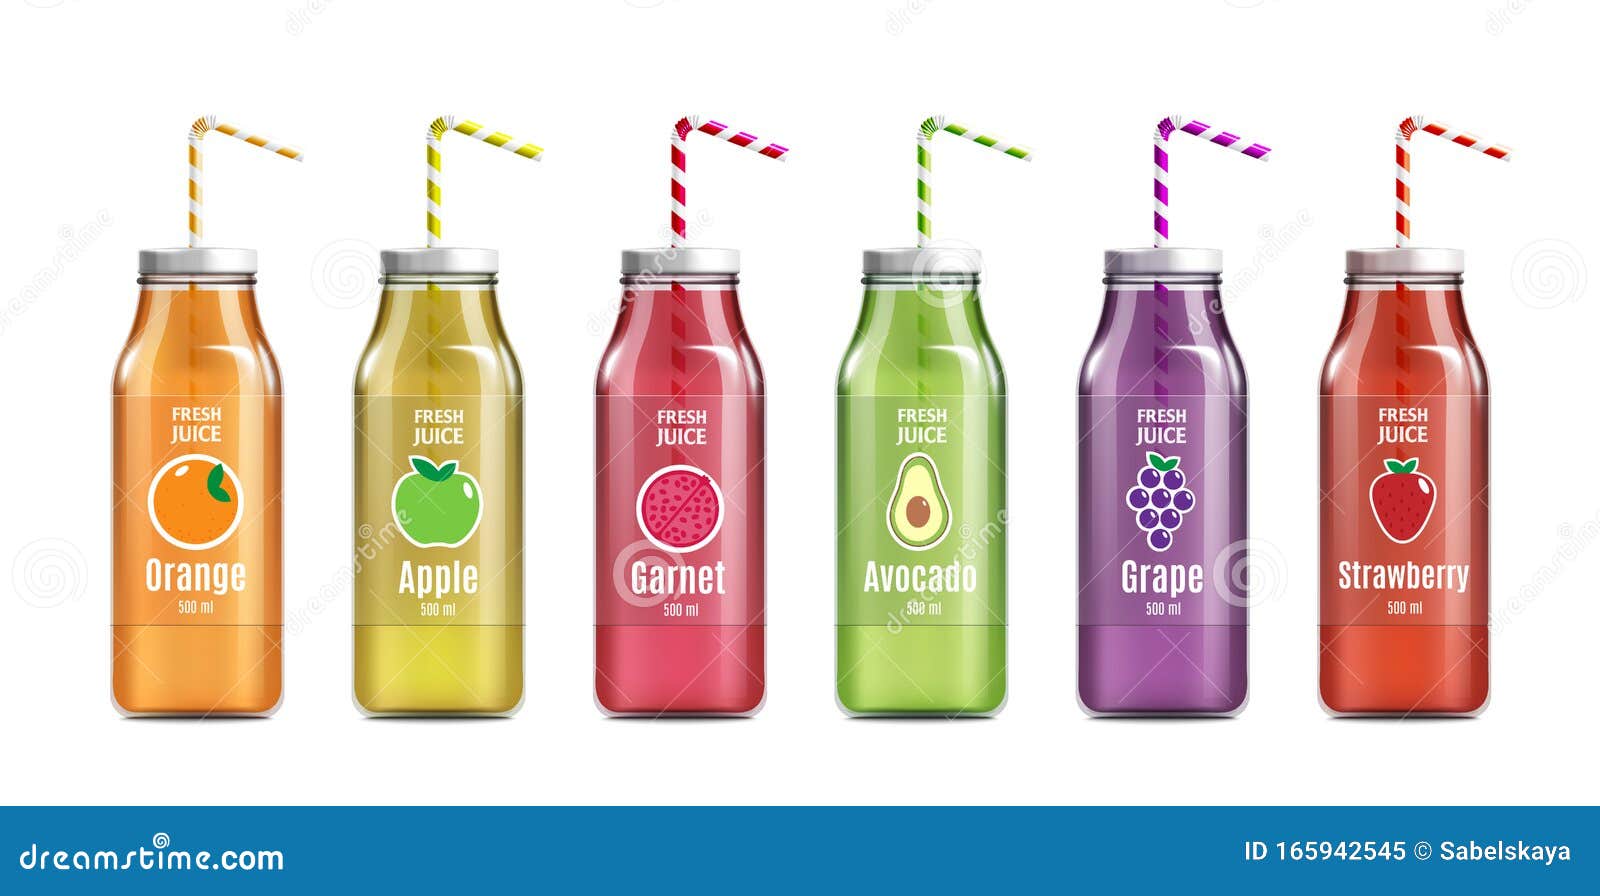 https://thumbs.dreamstime.com/z/plastic-glass-bottle-fresh-juice-various-tastes-straw-mockup-design-label-badges-packaging-fruit-drink-template-165942545.jpg